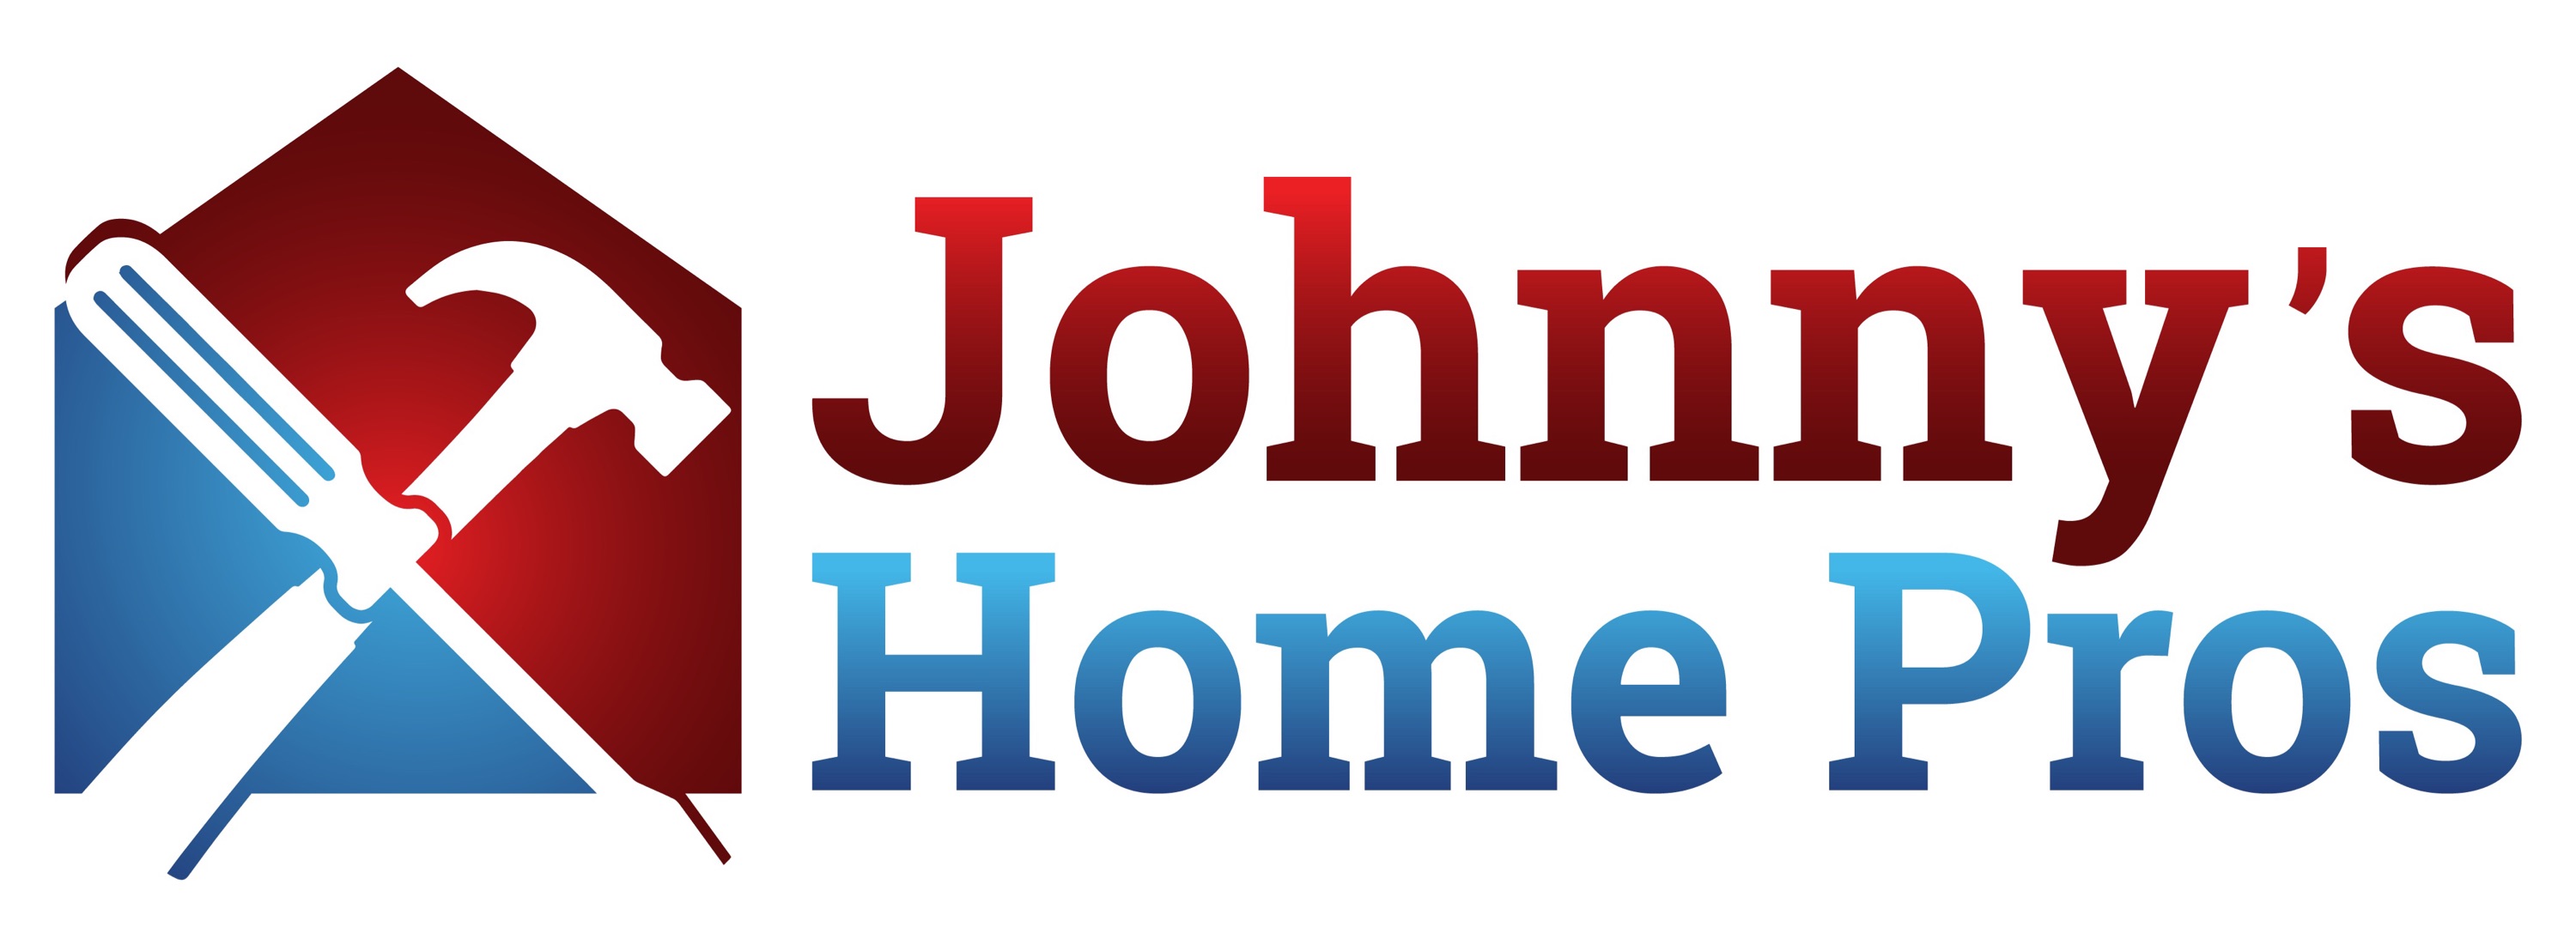 JOHNNYS HOME PROS LLC Logo